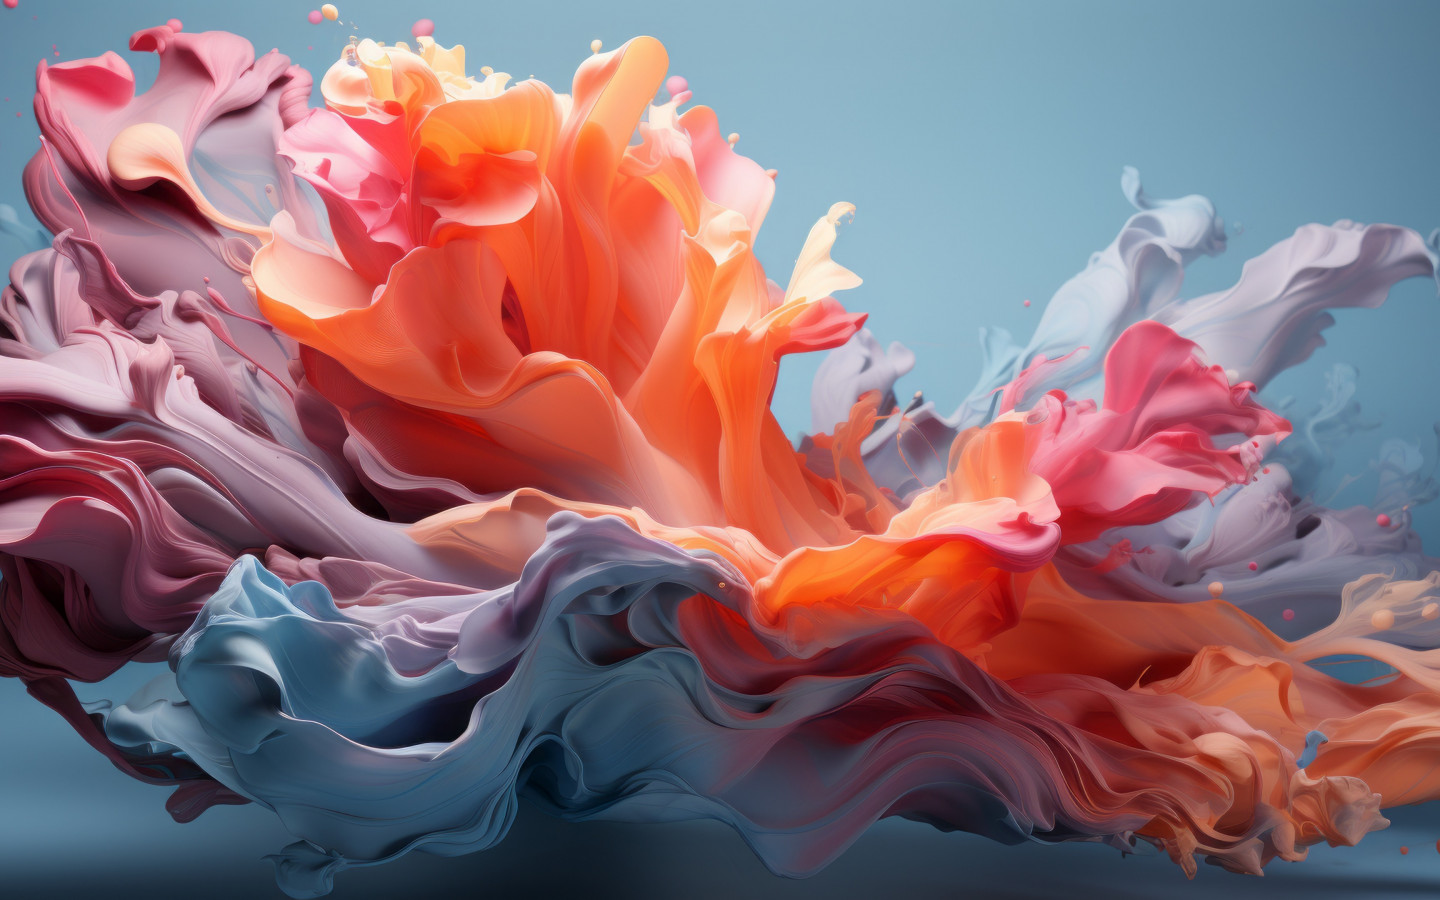 Super Abstract Digital Art wallpaper 1440x900